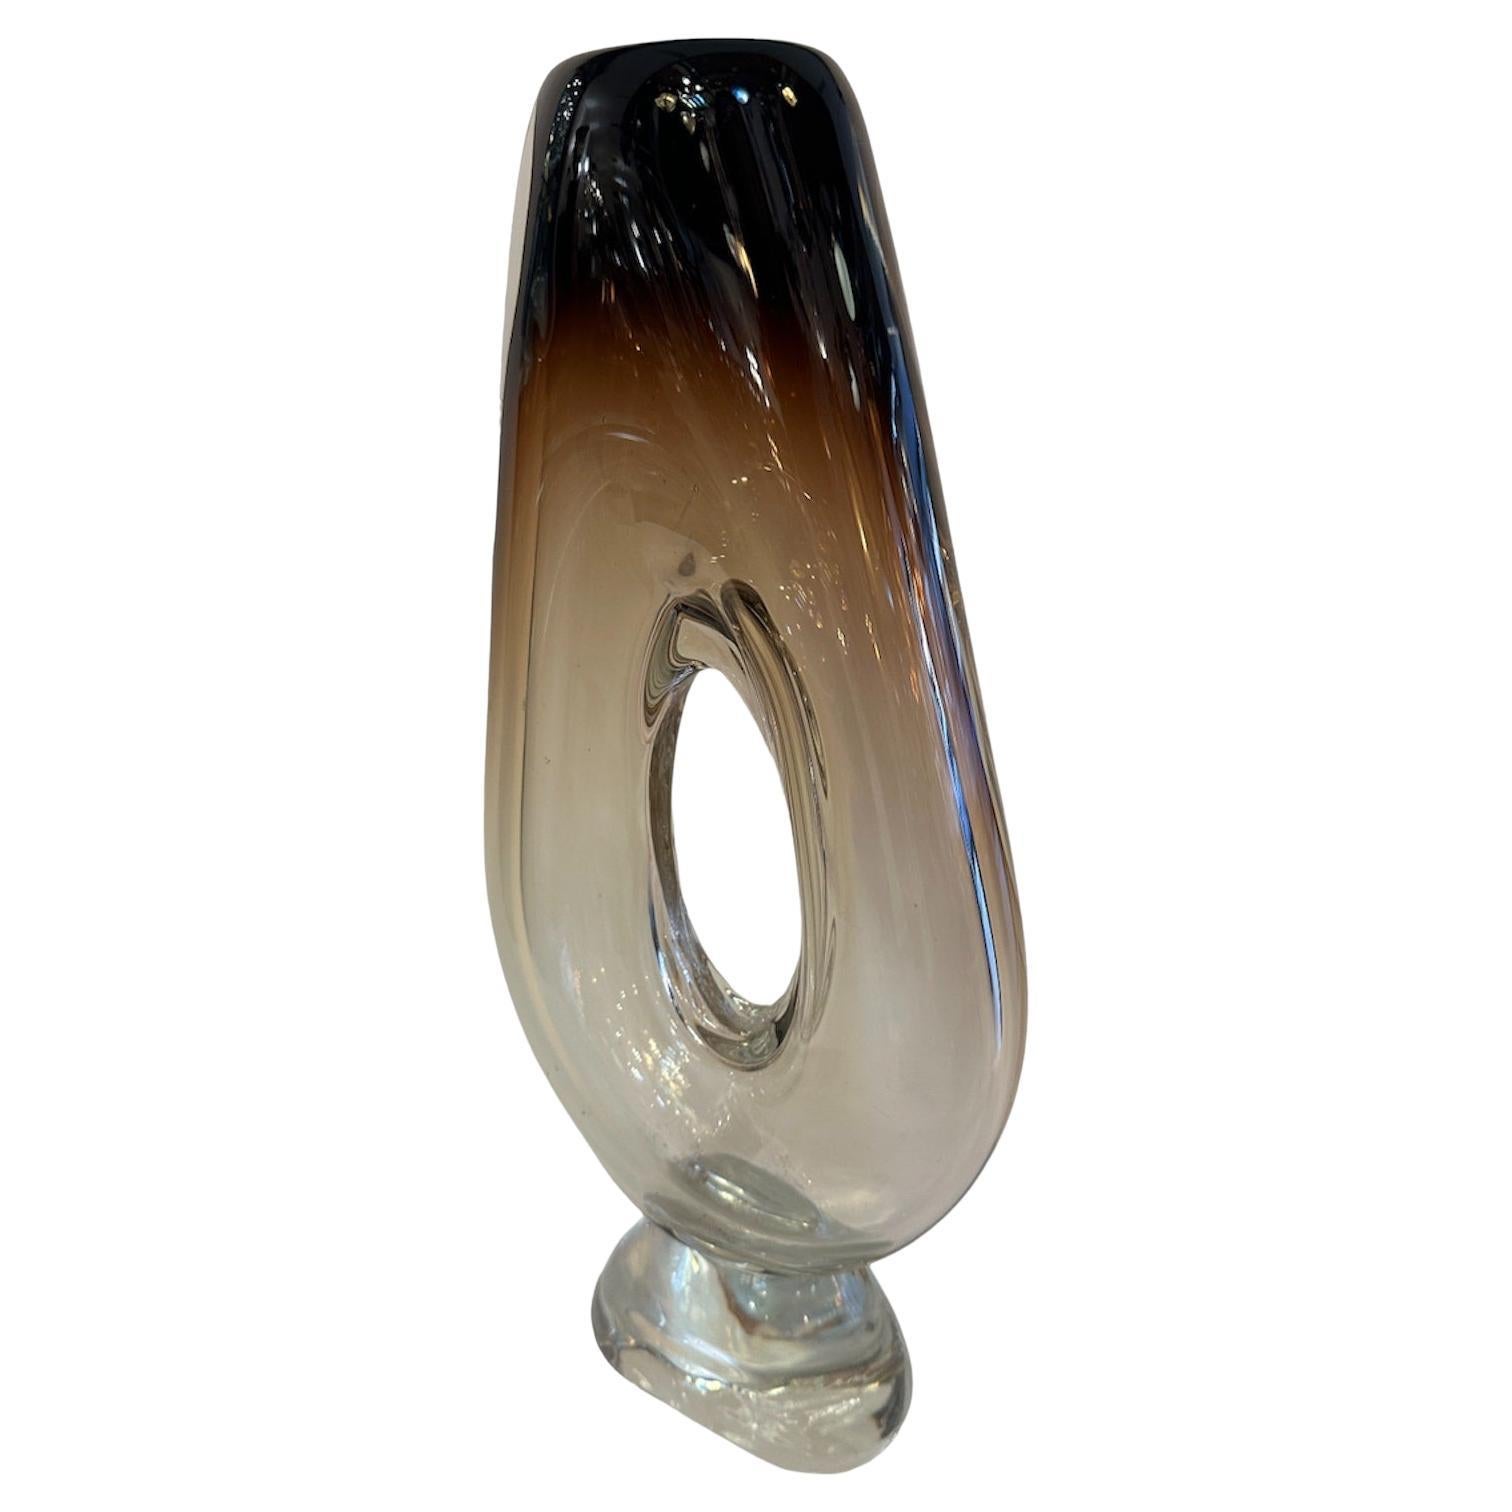 Vase, signiert: Cristaleria Querandi Jugendstil 0294/85